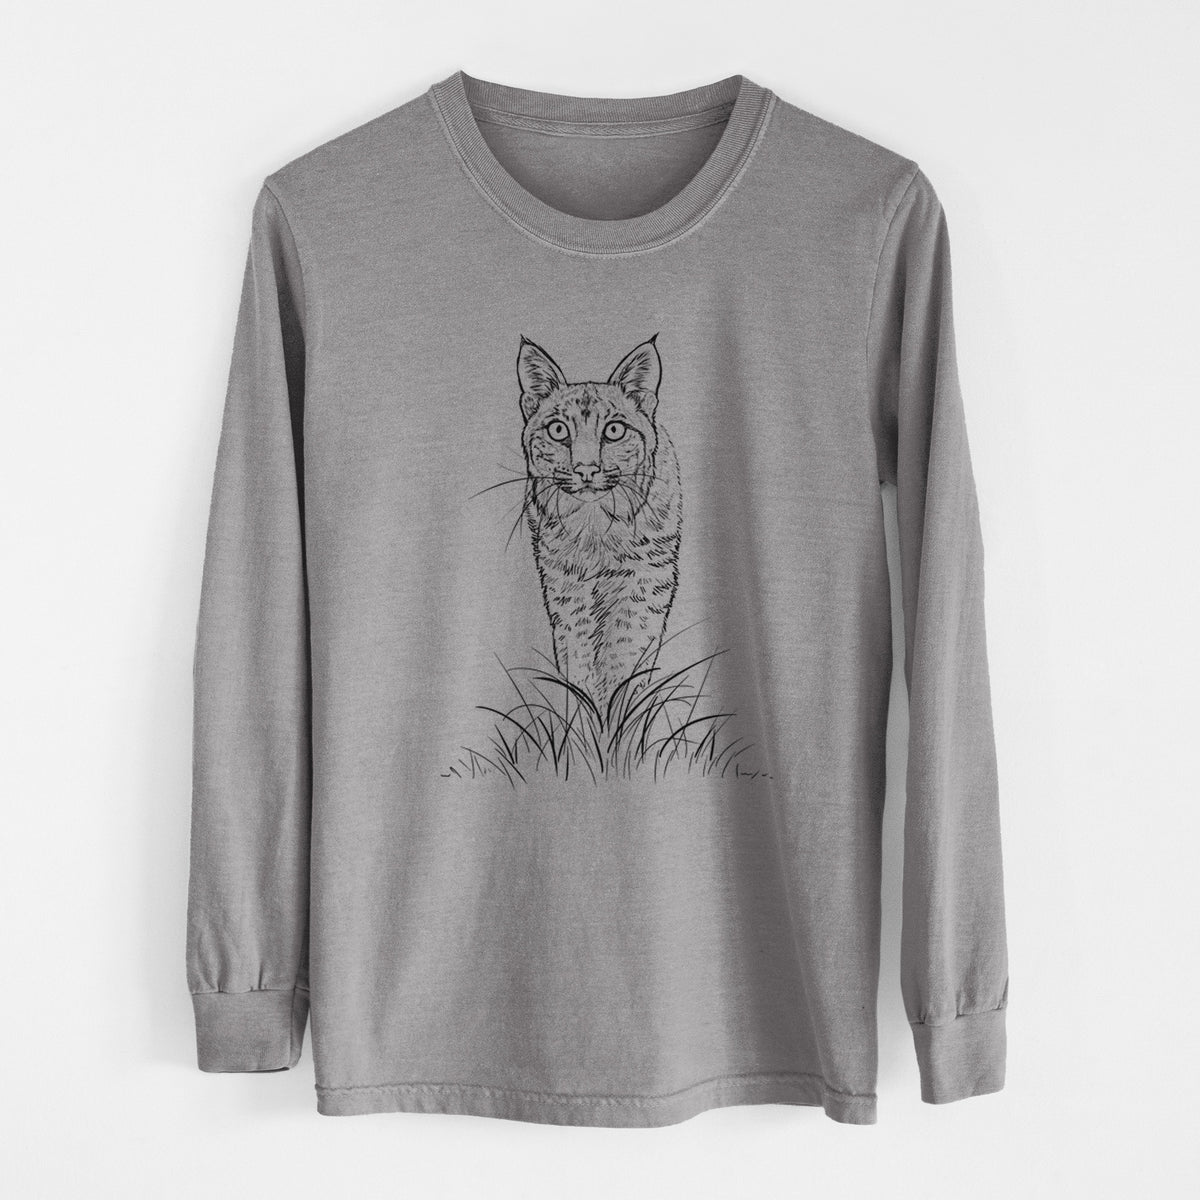 Bobcat - Lynx rufus - Heavyweight 100% Cotton Long Sleeve